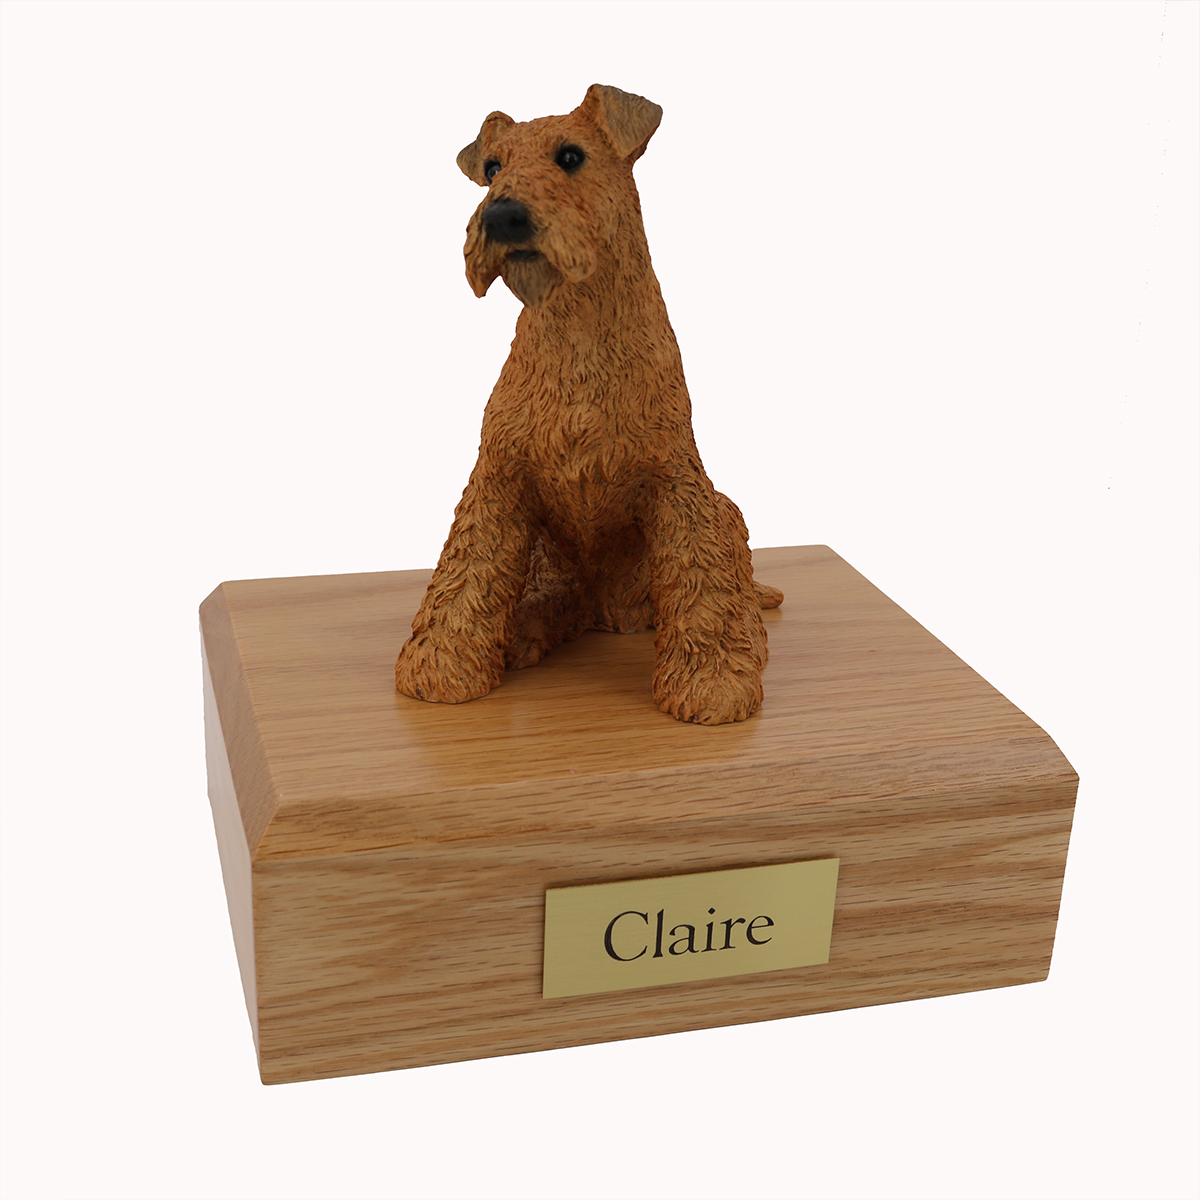 Dog, Airedale Terrier - Figurine Urn